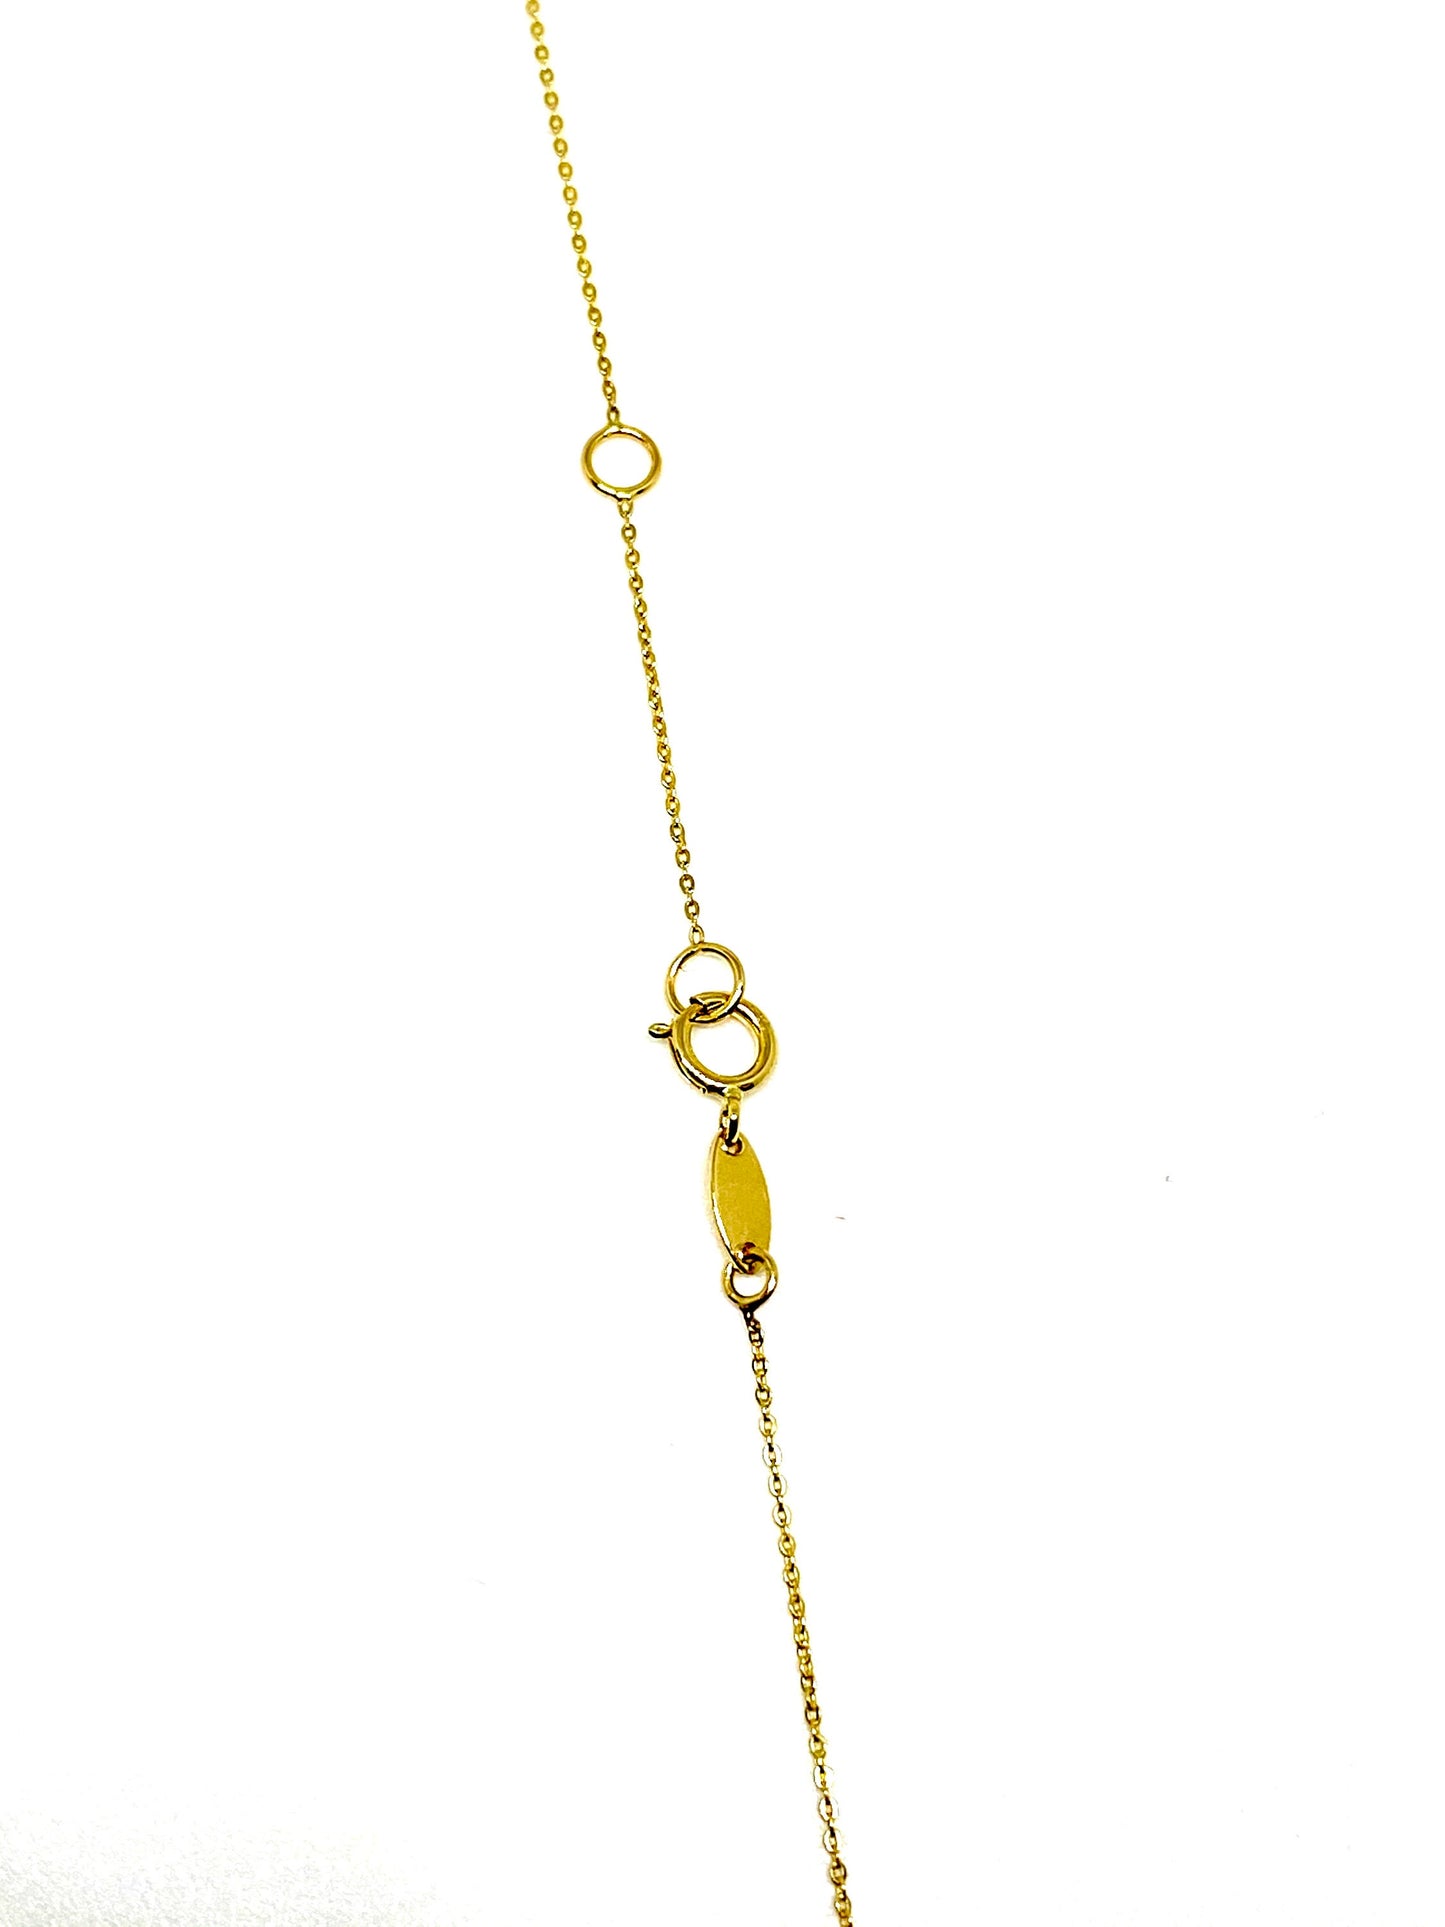 Italian Yellow Gold Delicate Adjustable Chain